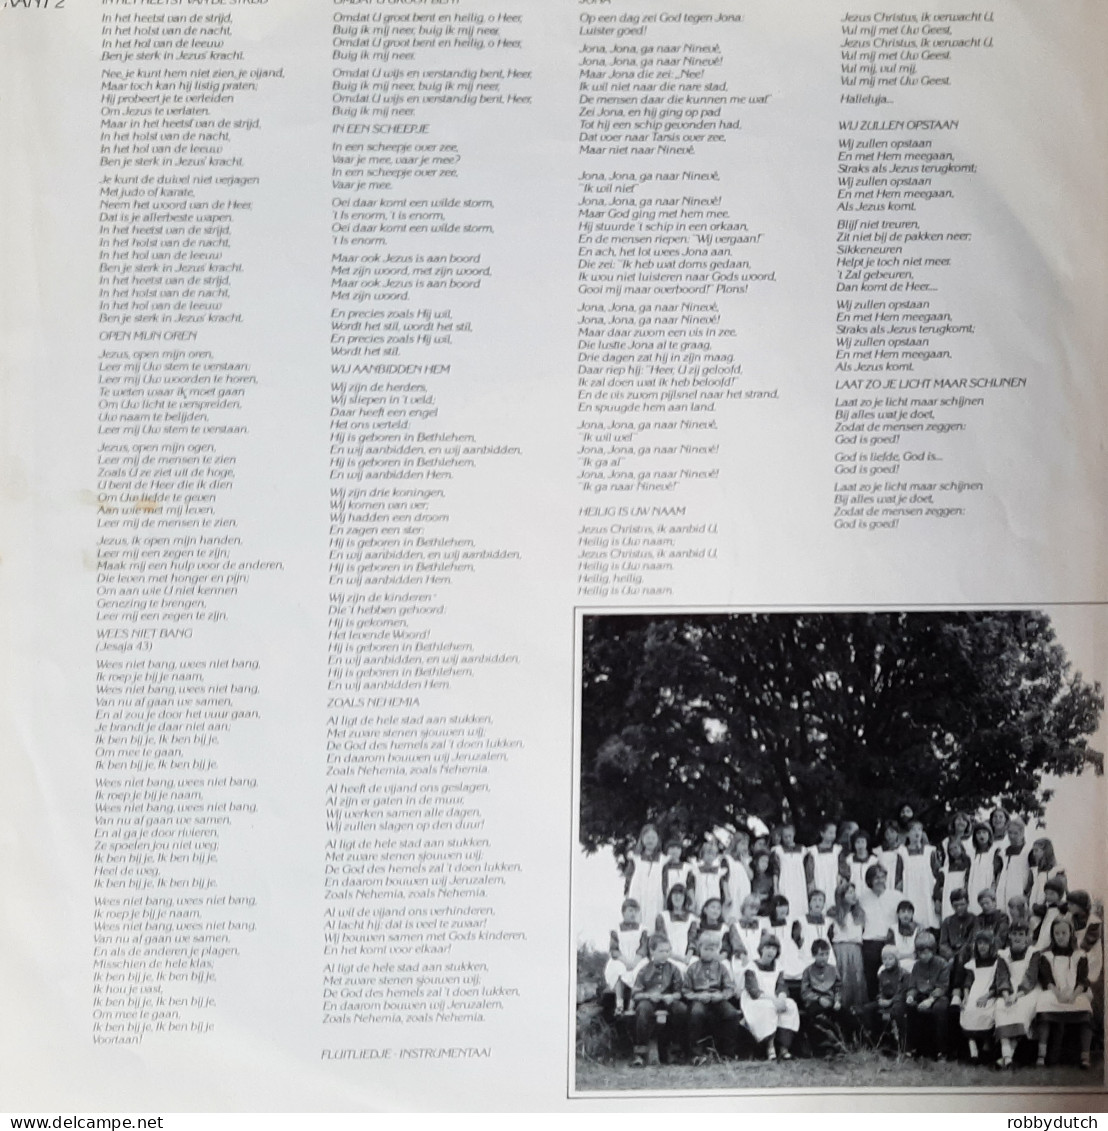 * LP *  ELLY & RIKKERT - SAMEN (Holland 1983 EX-) - Religion & Gospel